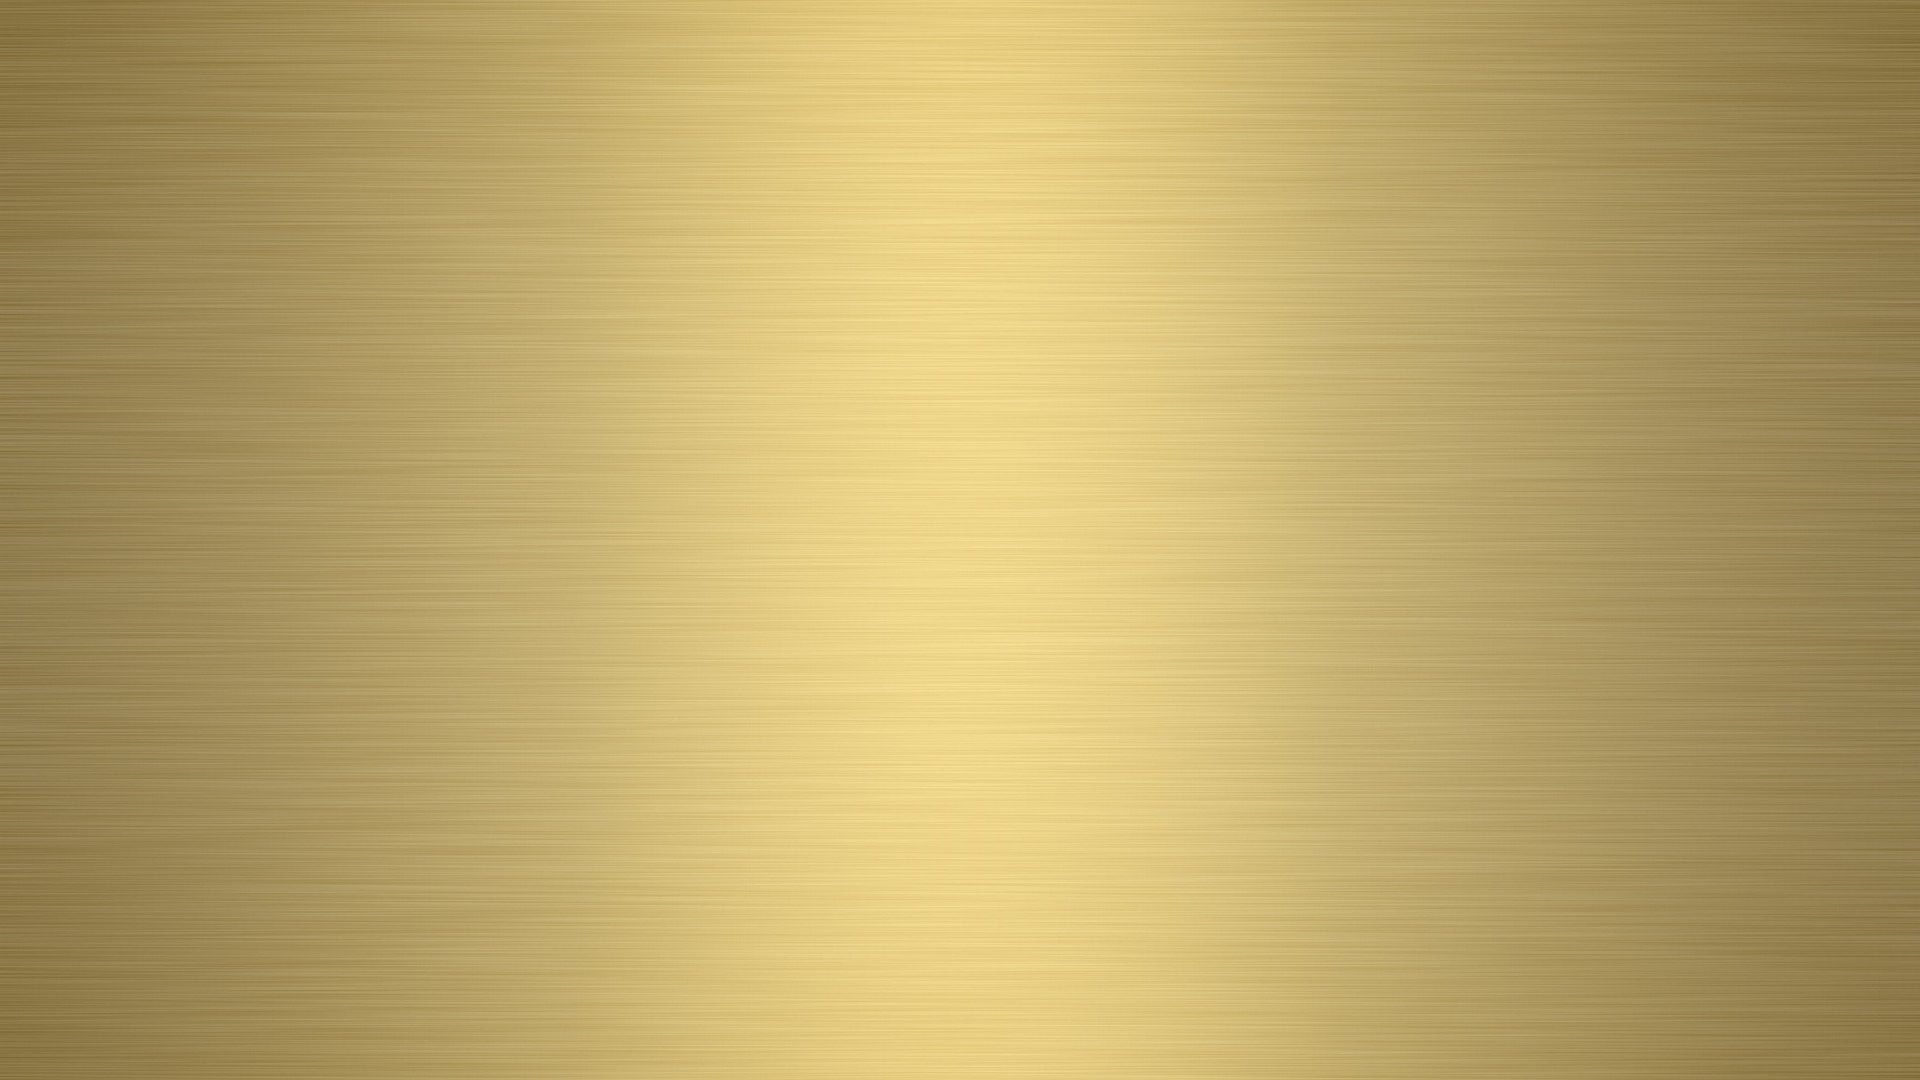 1920x1080 Amazing Gold Wall Paper Plain Wallpaper For Desktop 2018 Cute Screensaver  Hd Iphone B Q Uk 6 Bedroom 7